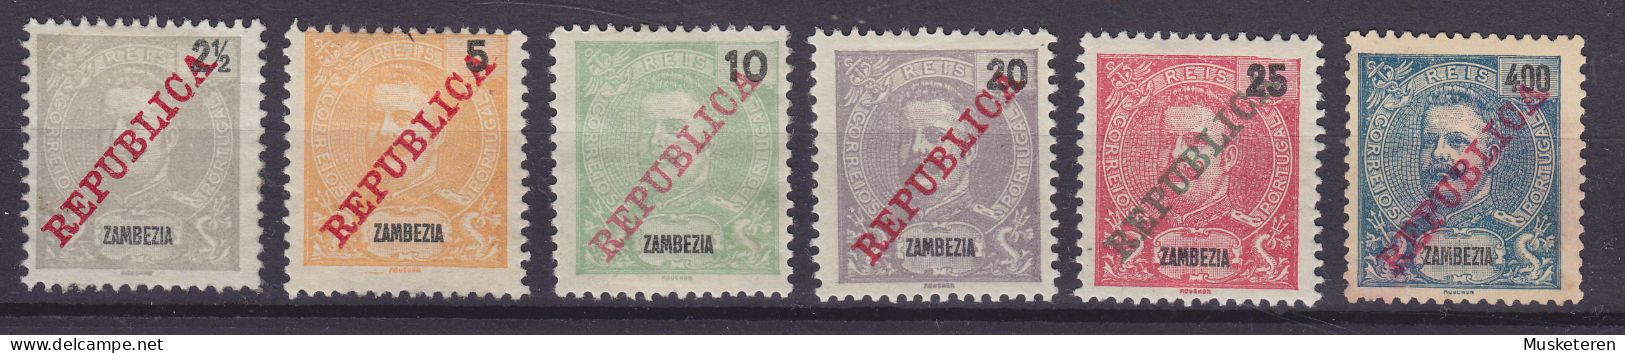 Zambezia 1911 Mi. 55-57, 59-60, 67 König Karl I. Overprinted REPUBLICA, MH*/MNG (*) (2 Scans) - Zambèze